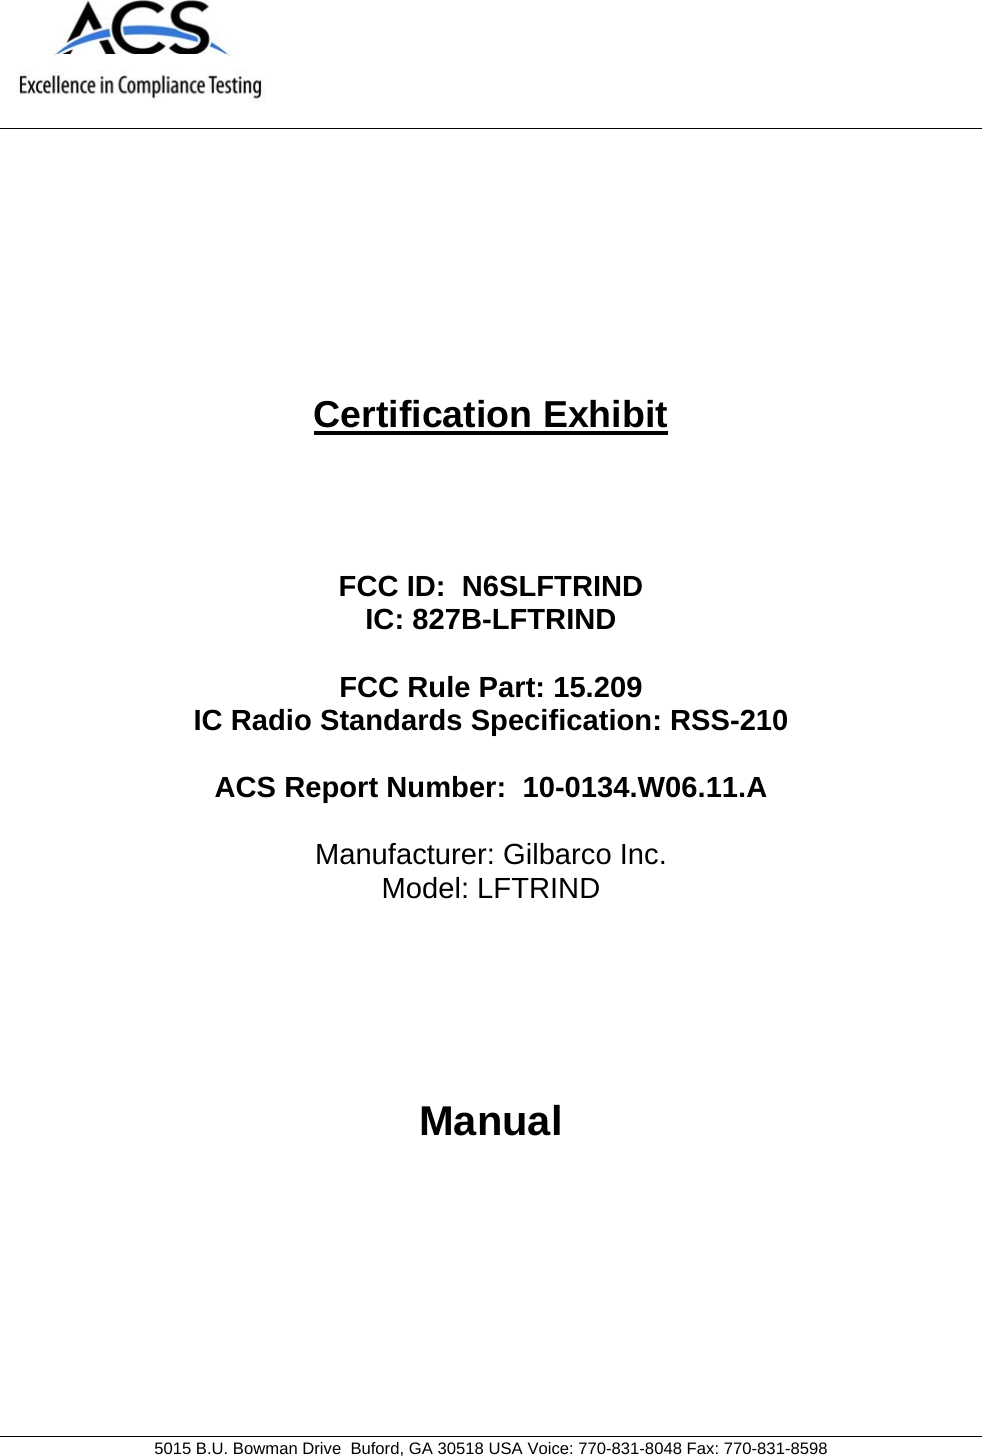     5015 B.U. Bowman Drive  Buford, GA 30518 USA Voice: 770-831-8048 Fax: 770-831-8598   Certification Exhibit     FCC ID:  N6SLFTRIND IC: 827B-LFTRIND  FCC Rule Part: 15.209 IC Radio Standards Specification: RSS-210  ACS Report Number:  10-0134.W06.11.A   Manufacturer: Gilbarco Inc. Model: LFTRIND     Manual  